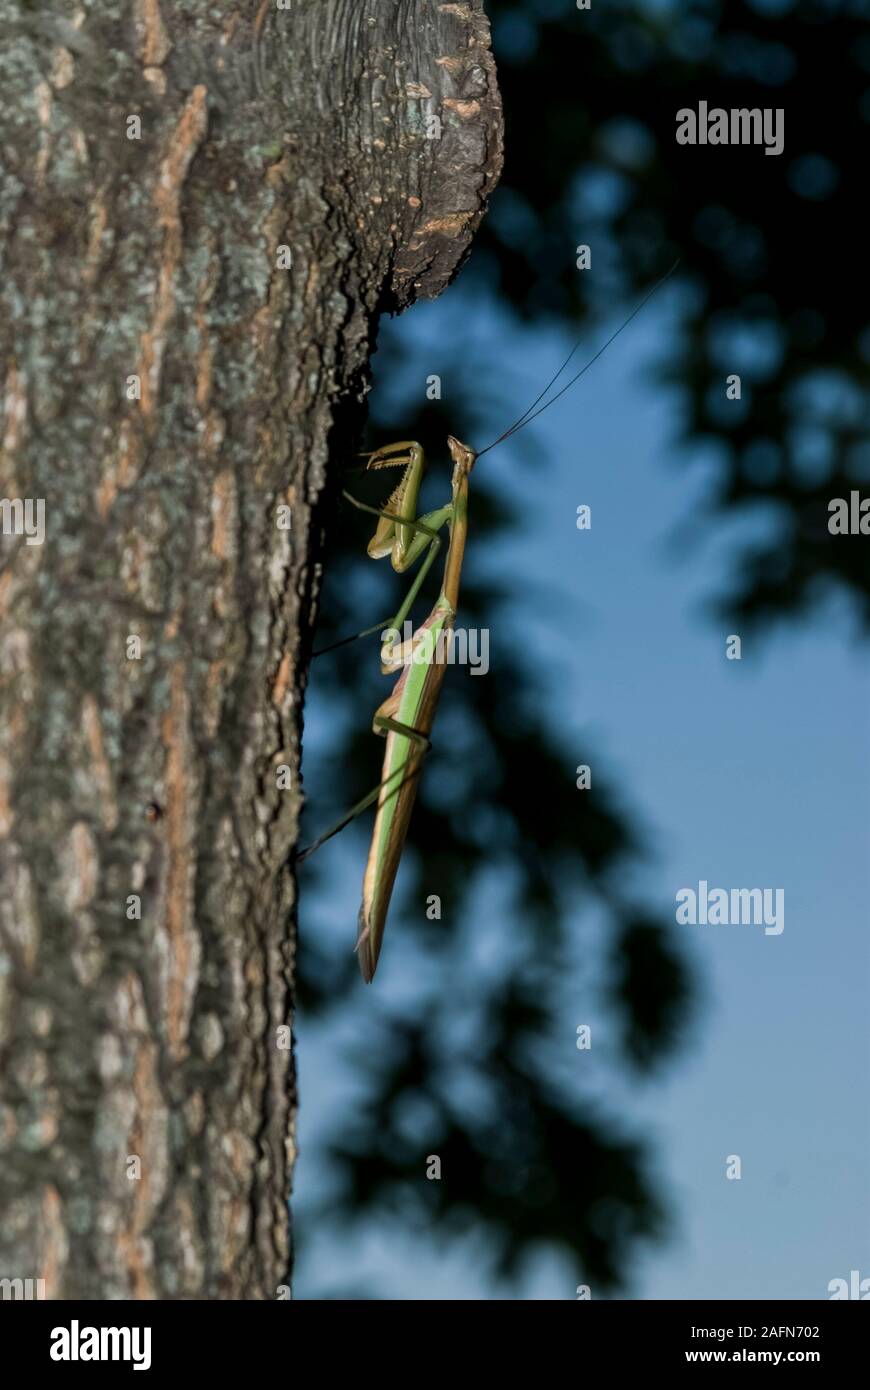 Leavenworth, Kansas.  Praying Mantis. Chinese Mantid, 'Tenodera aridifolia'  on tree trunk. Stock Photo